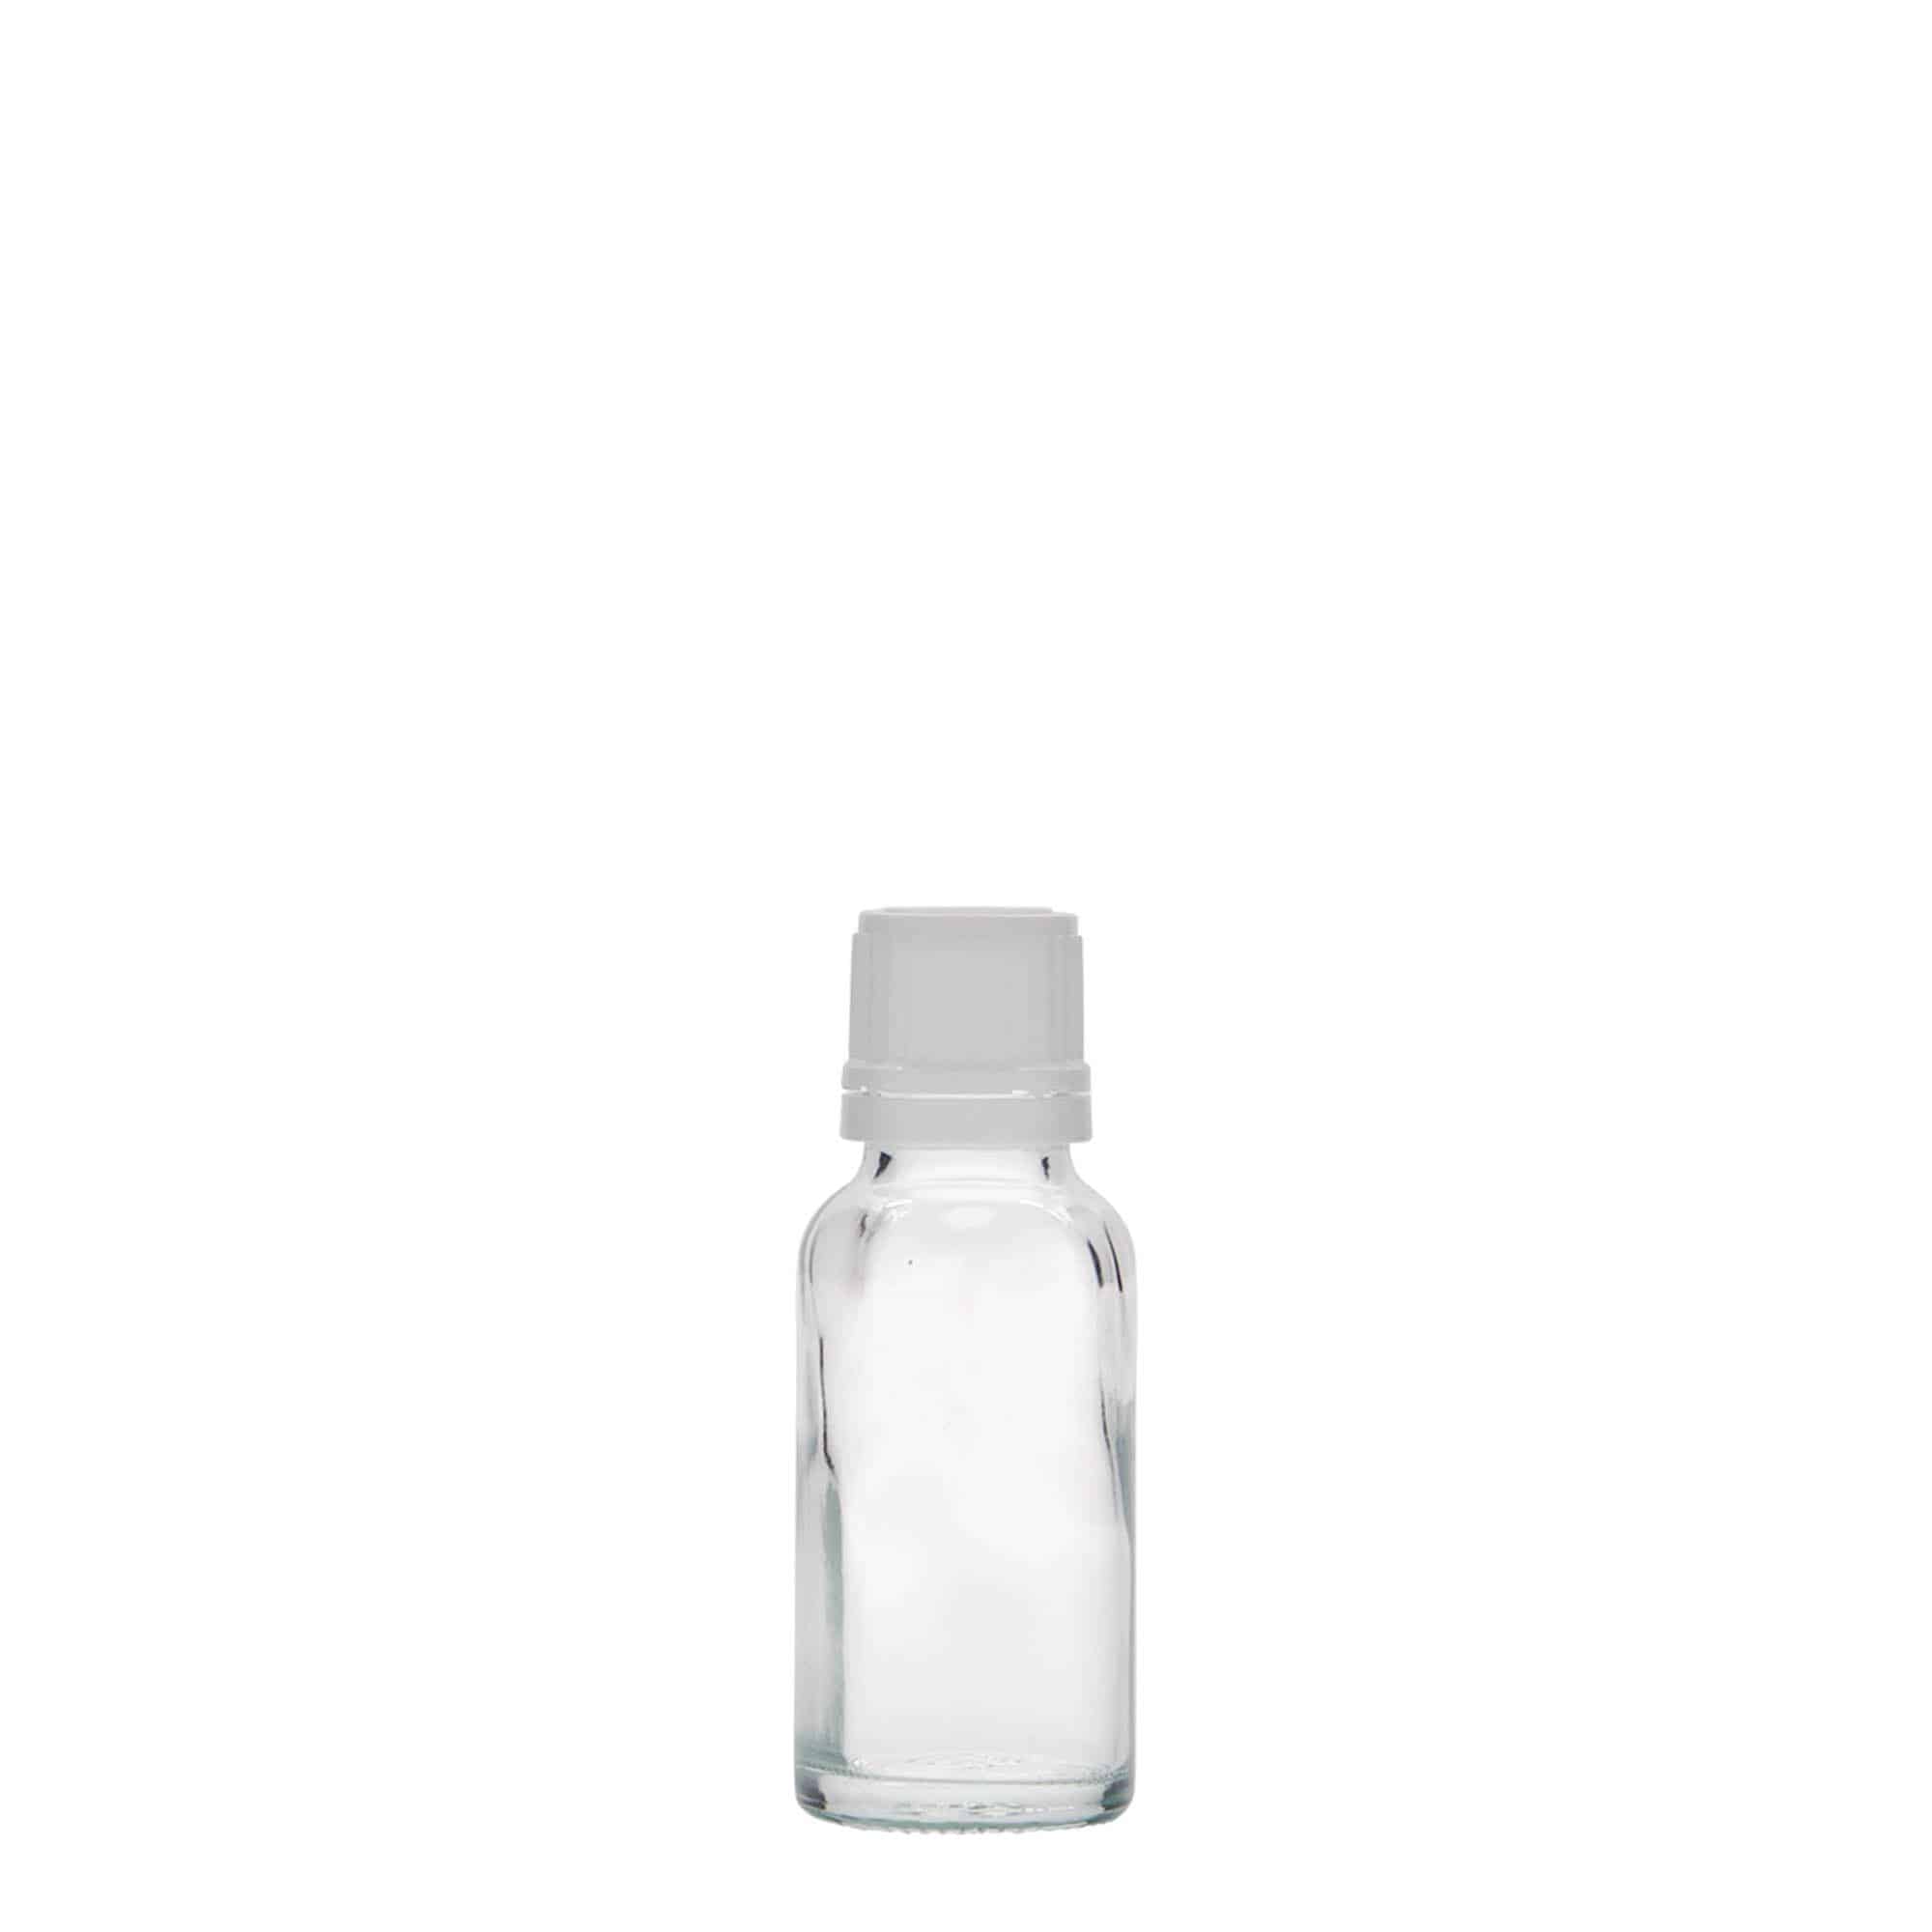 Lékovka 20 ml, sklo, ústí: DIN 18